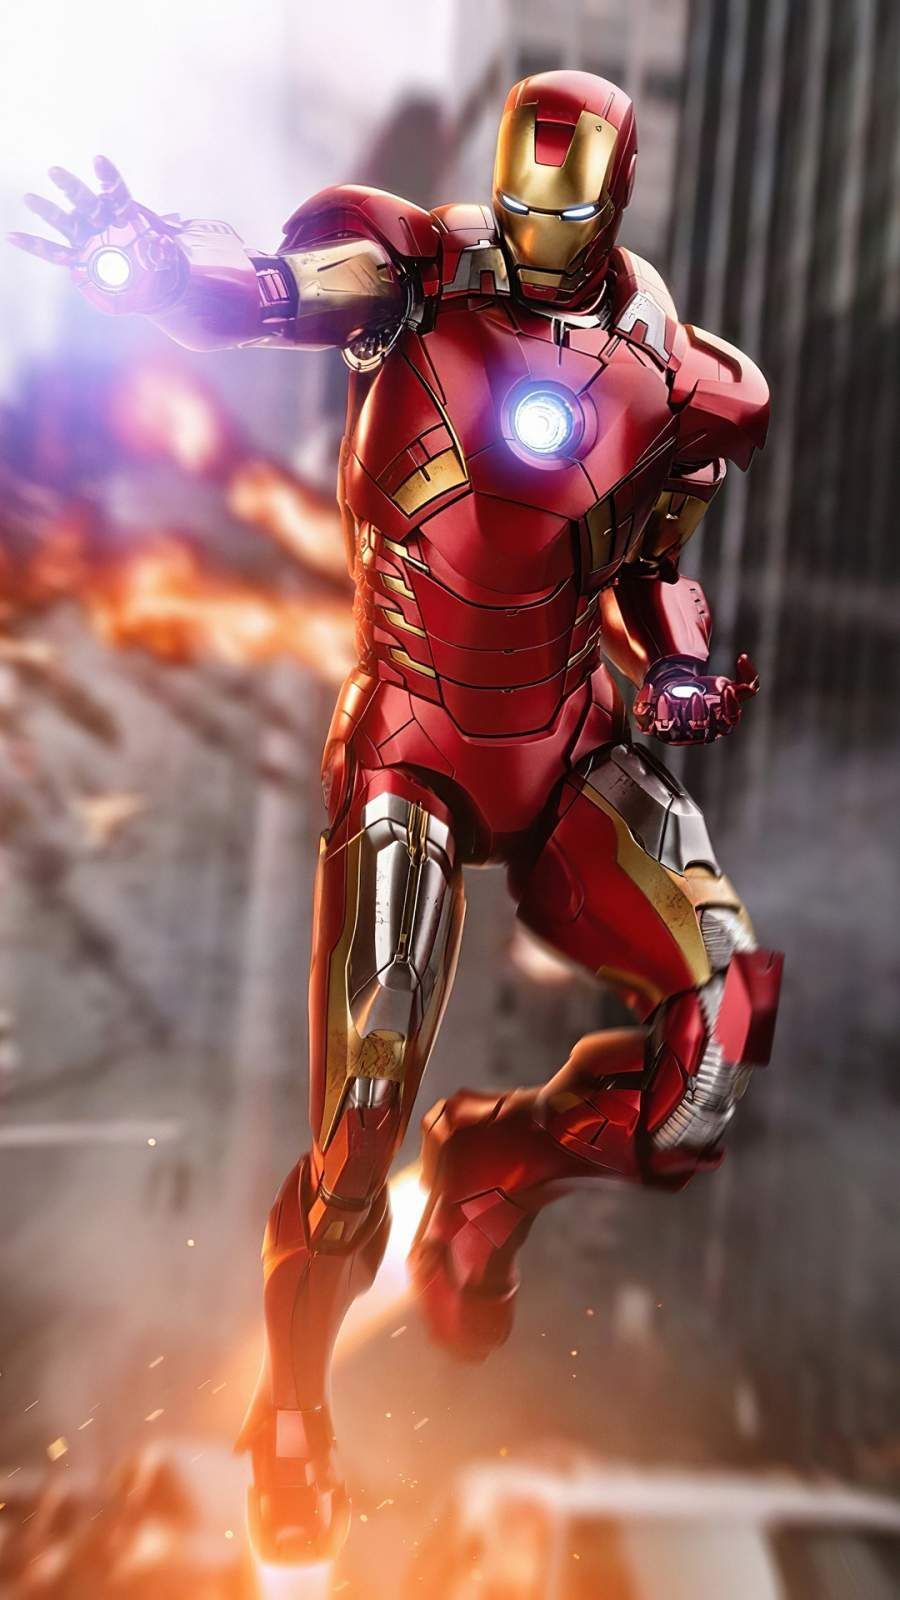 Iron Man 4K iPhone Wallpaper. Iron man wallpaper, Iron man art, Iron man avengers